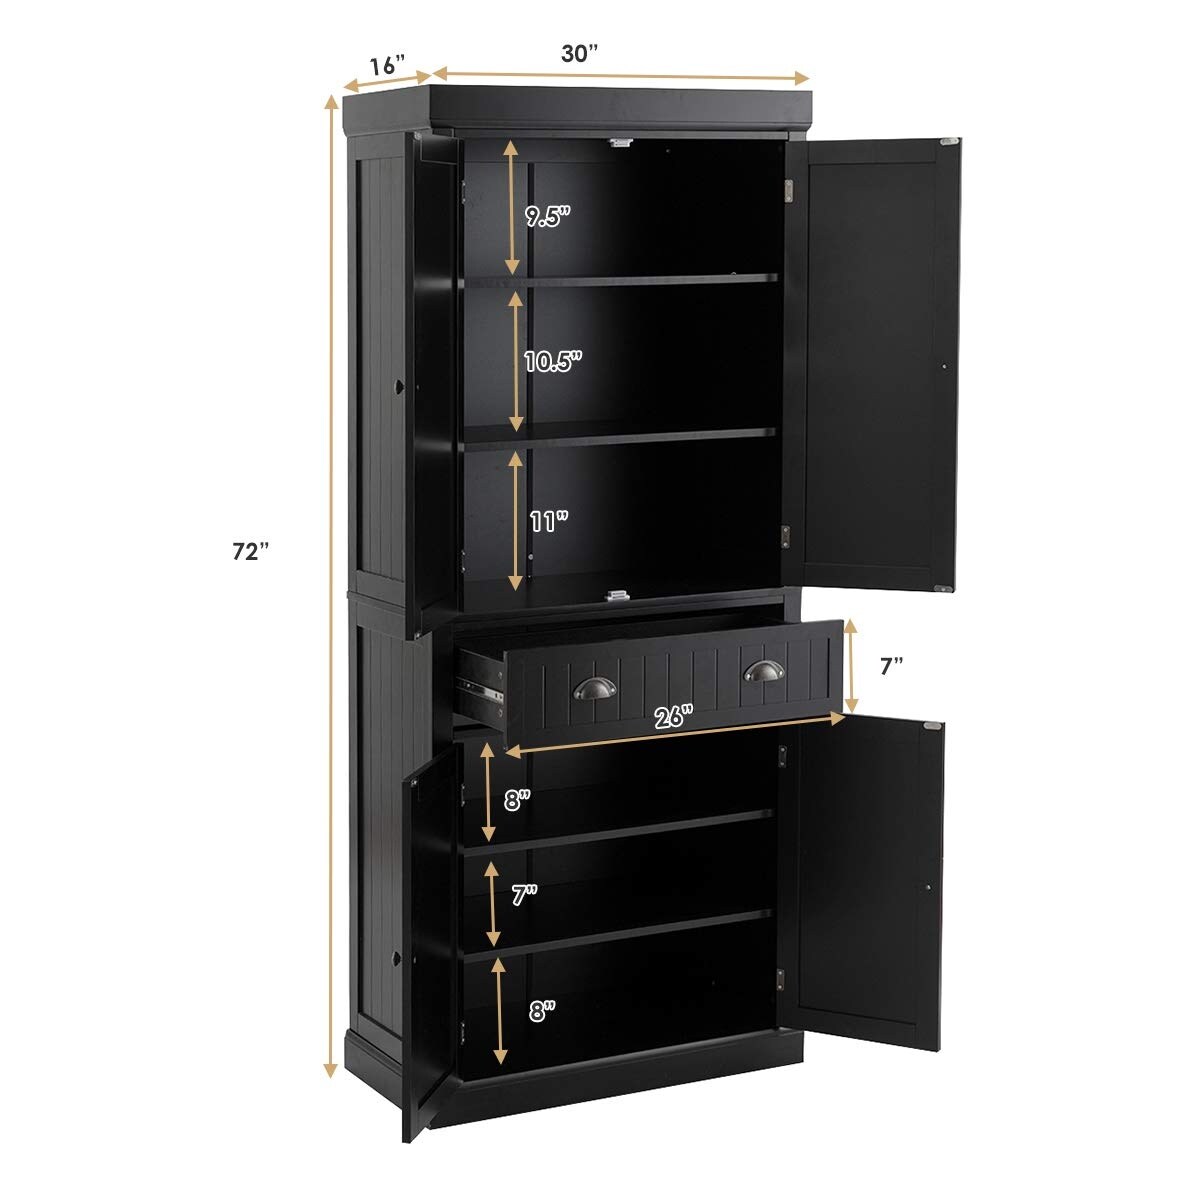 Kitchen Pantry Cupboard Cabinet, Freestanding Storage Cabinet w/Drawers & Adjustable Shelves, 4-Door Wooden Storage Organizer